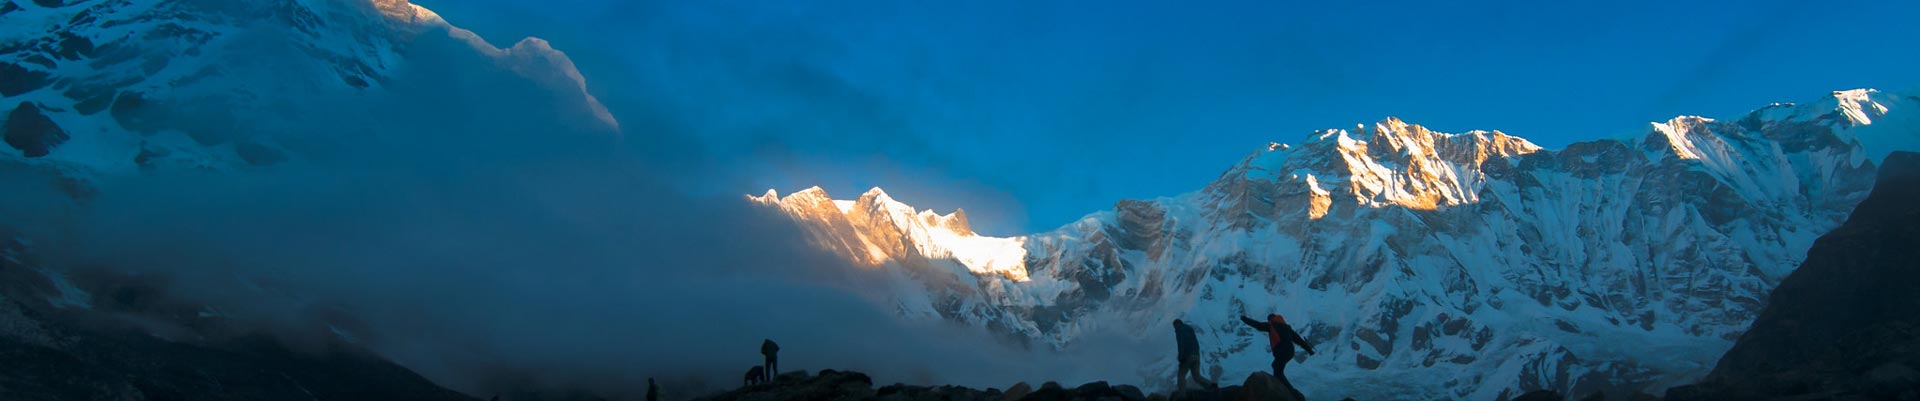 Top 7 Highlights of Nepal Annapurna Circuit Trek